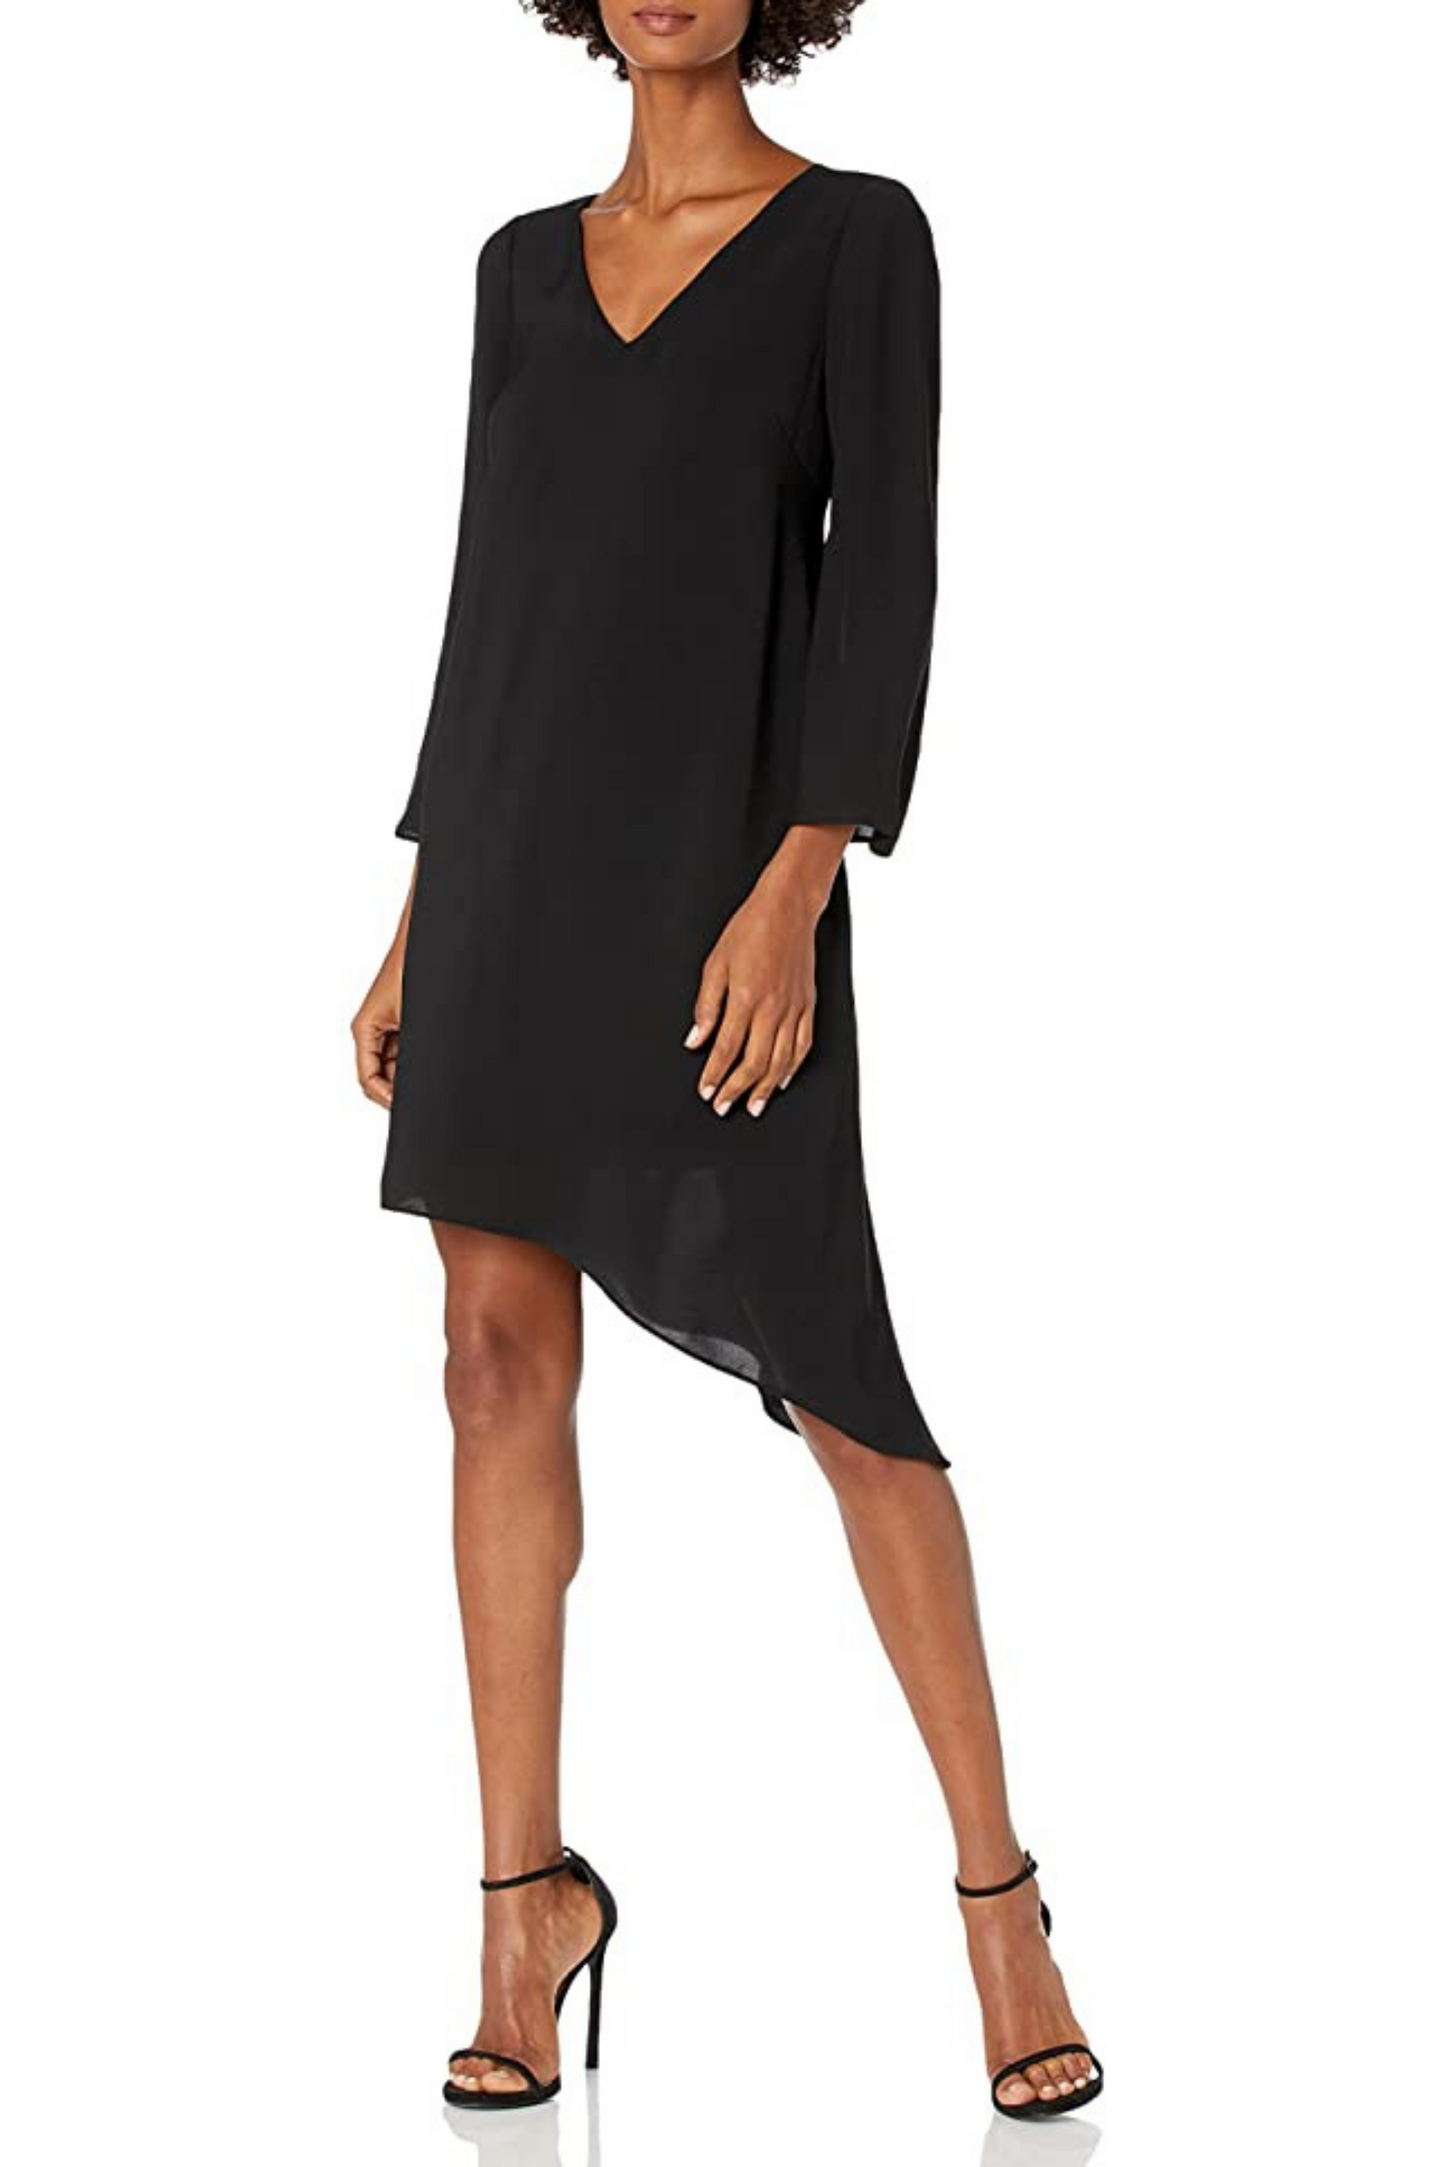  Black 3/4 Sleeve Asymmetrical Dress